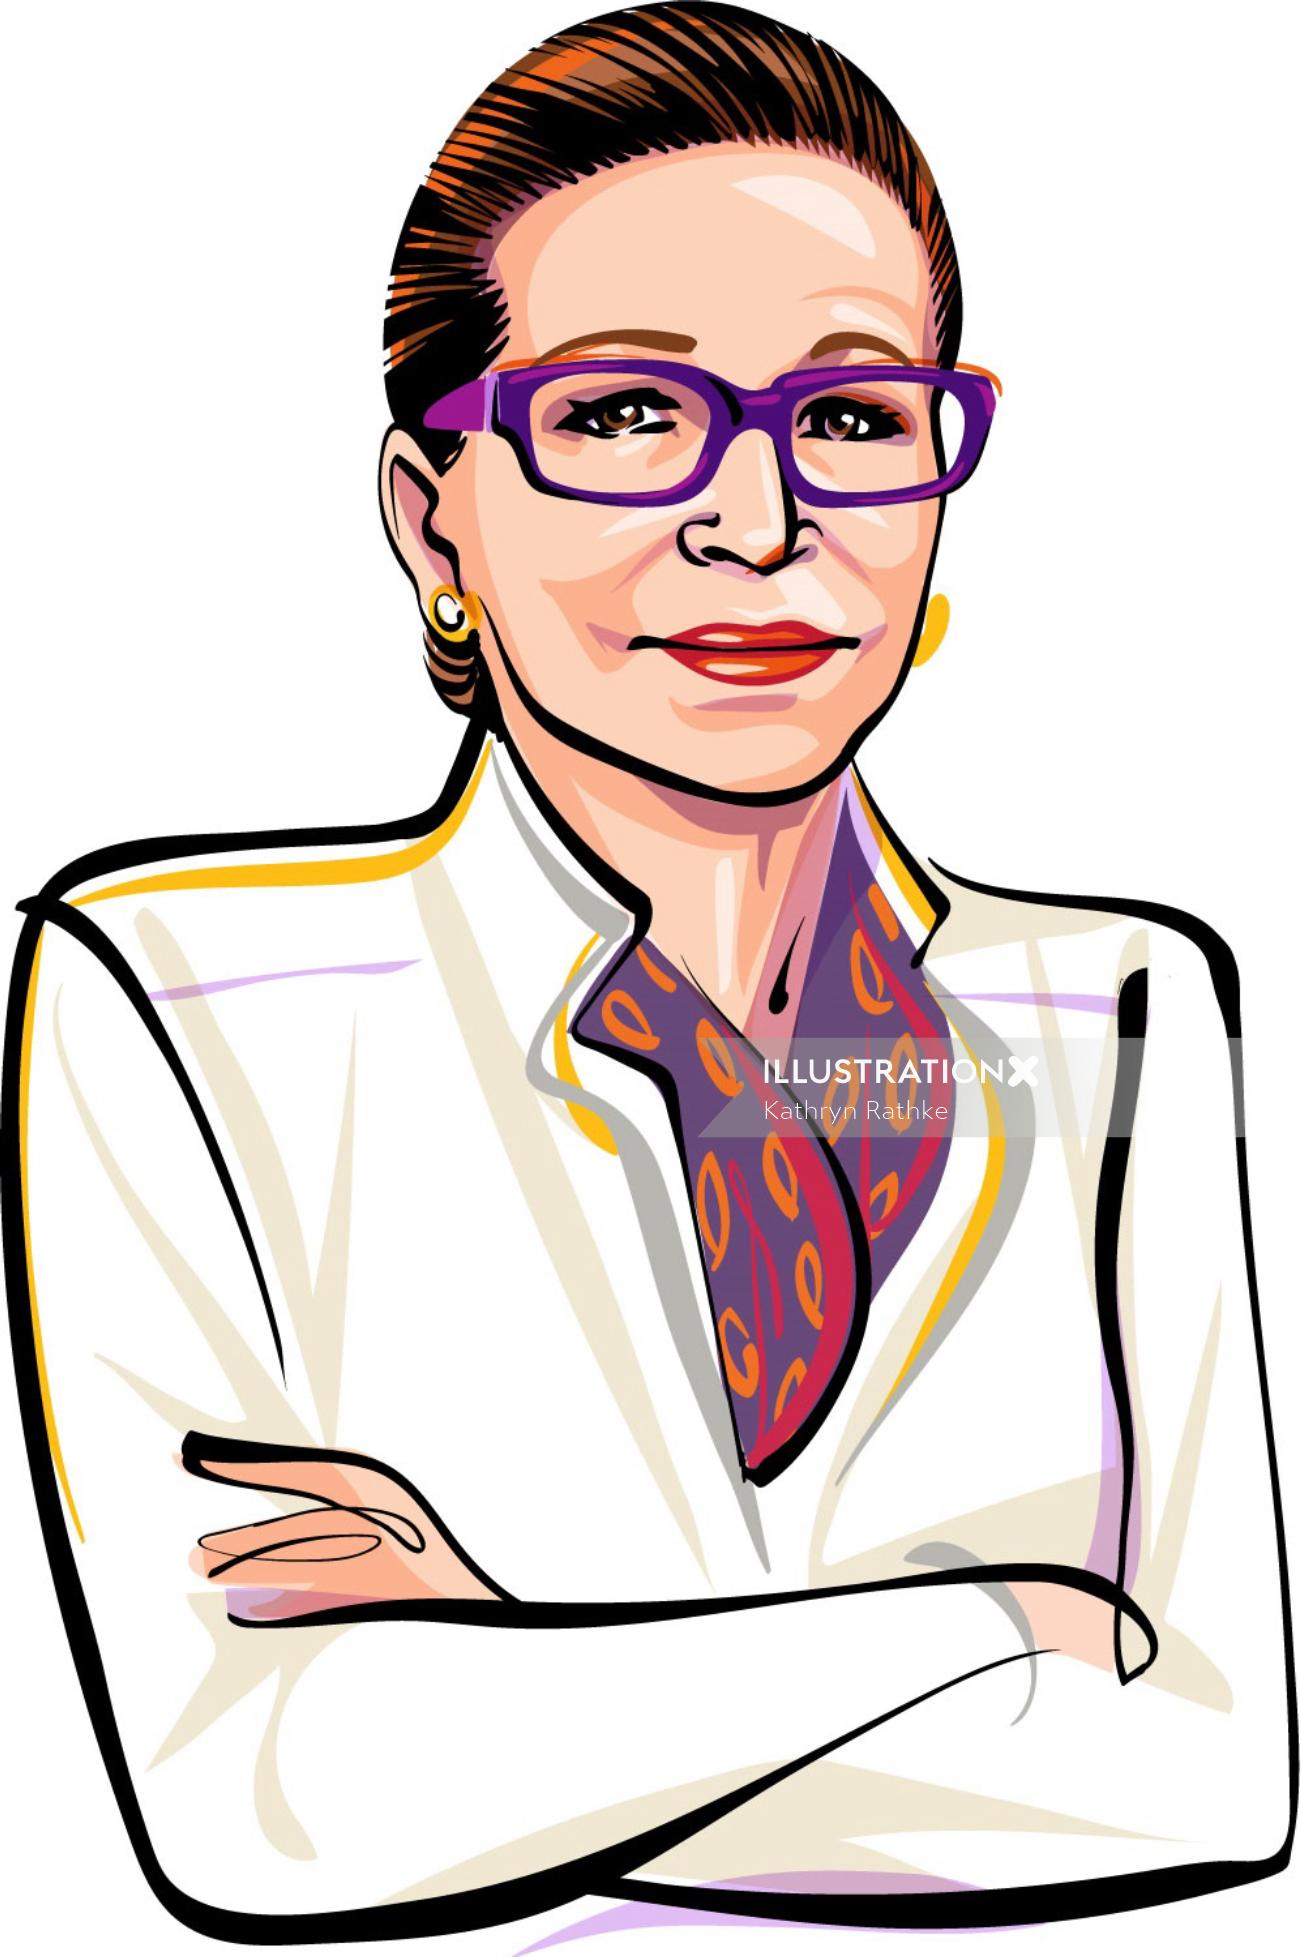 Former Associate Justice Ruth Bader Ginsburg's portrait